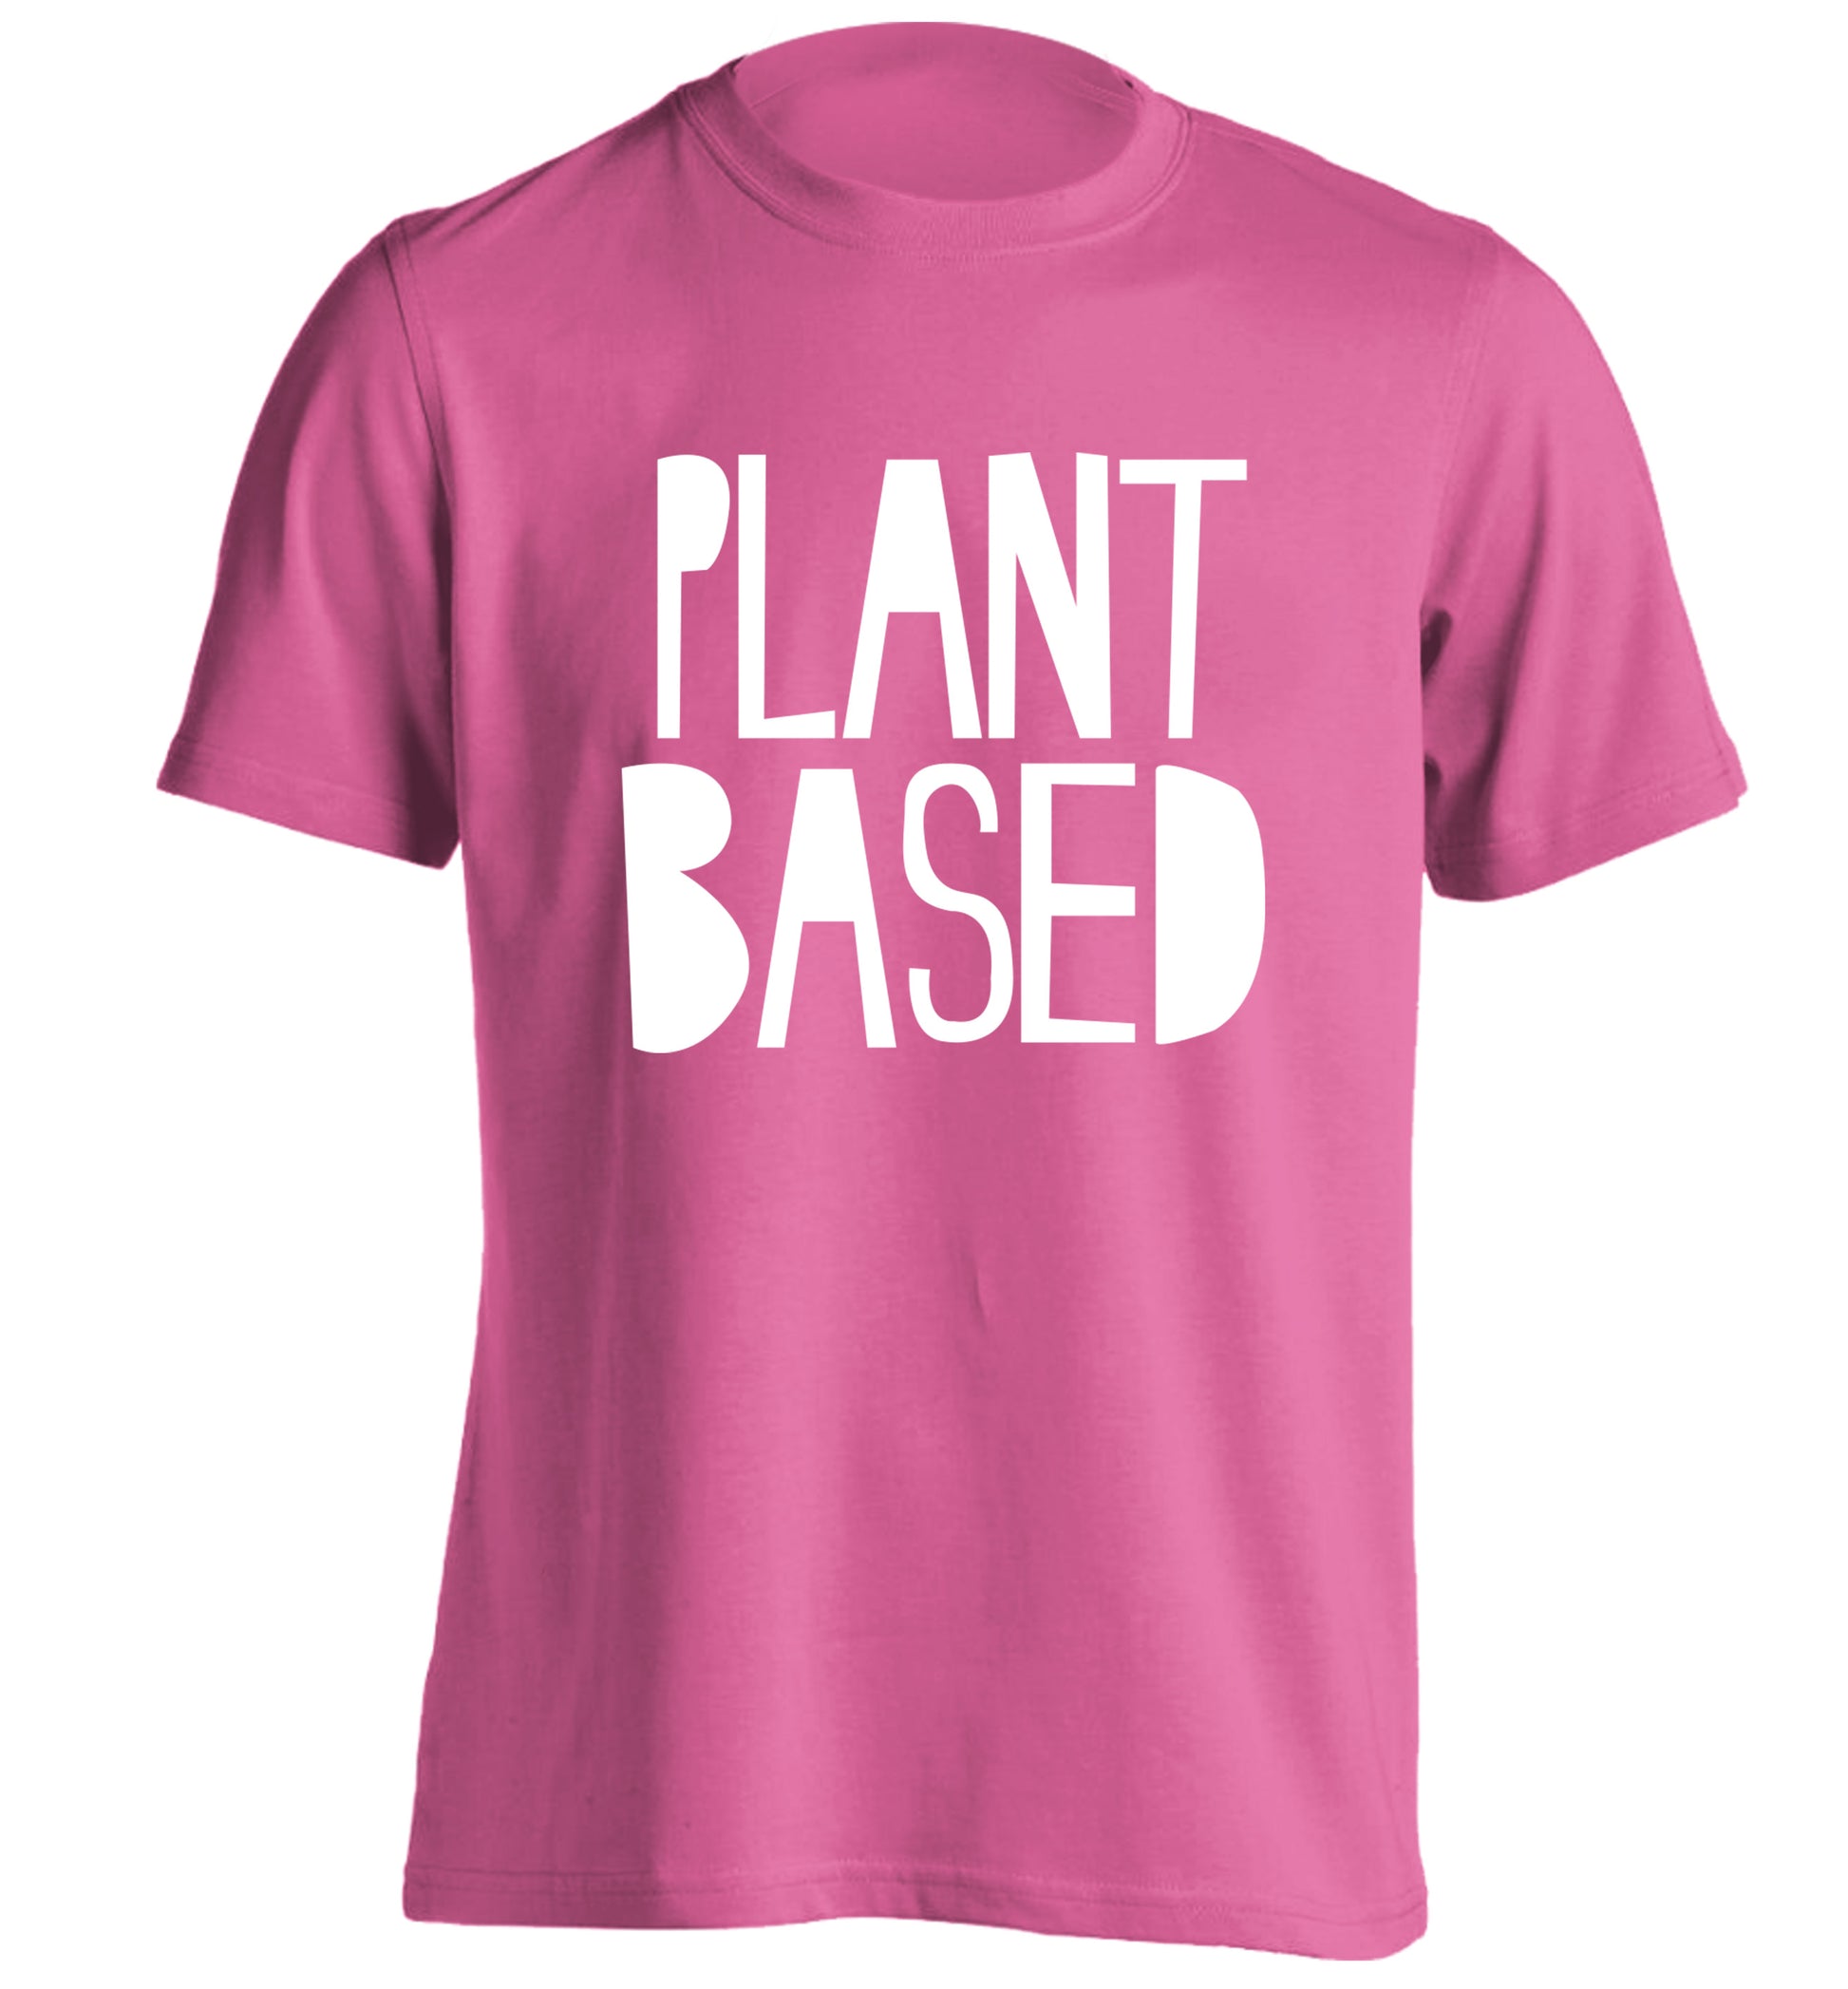 Plant Based adults unisex pink Tshirt 2XL